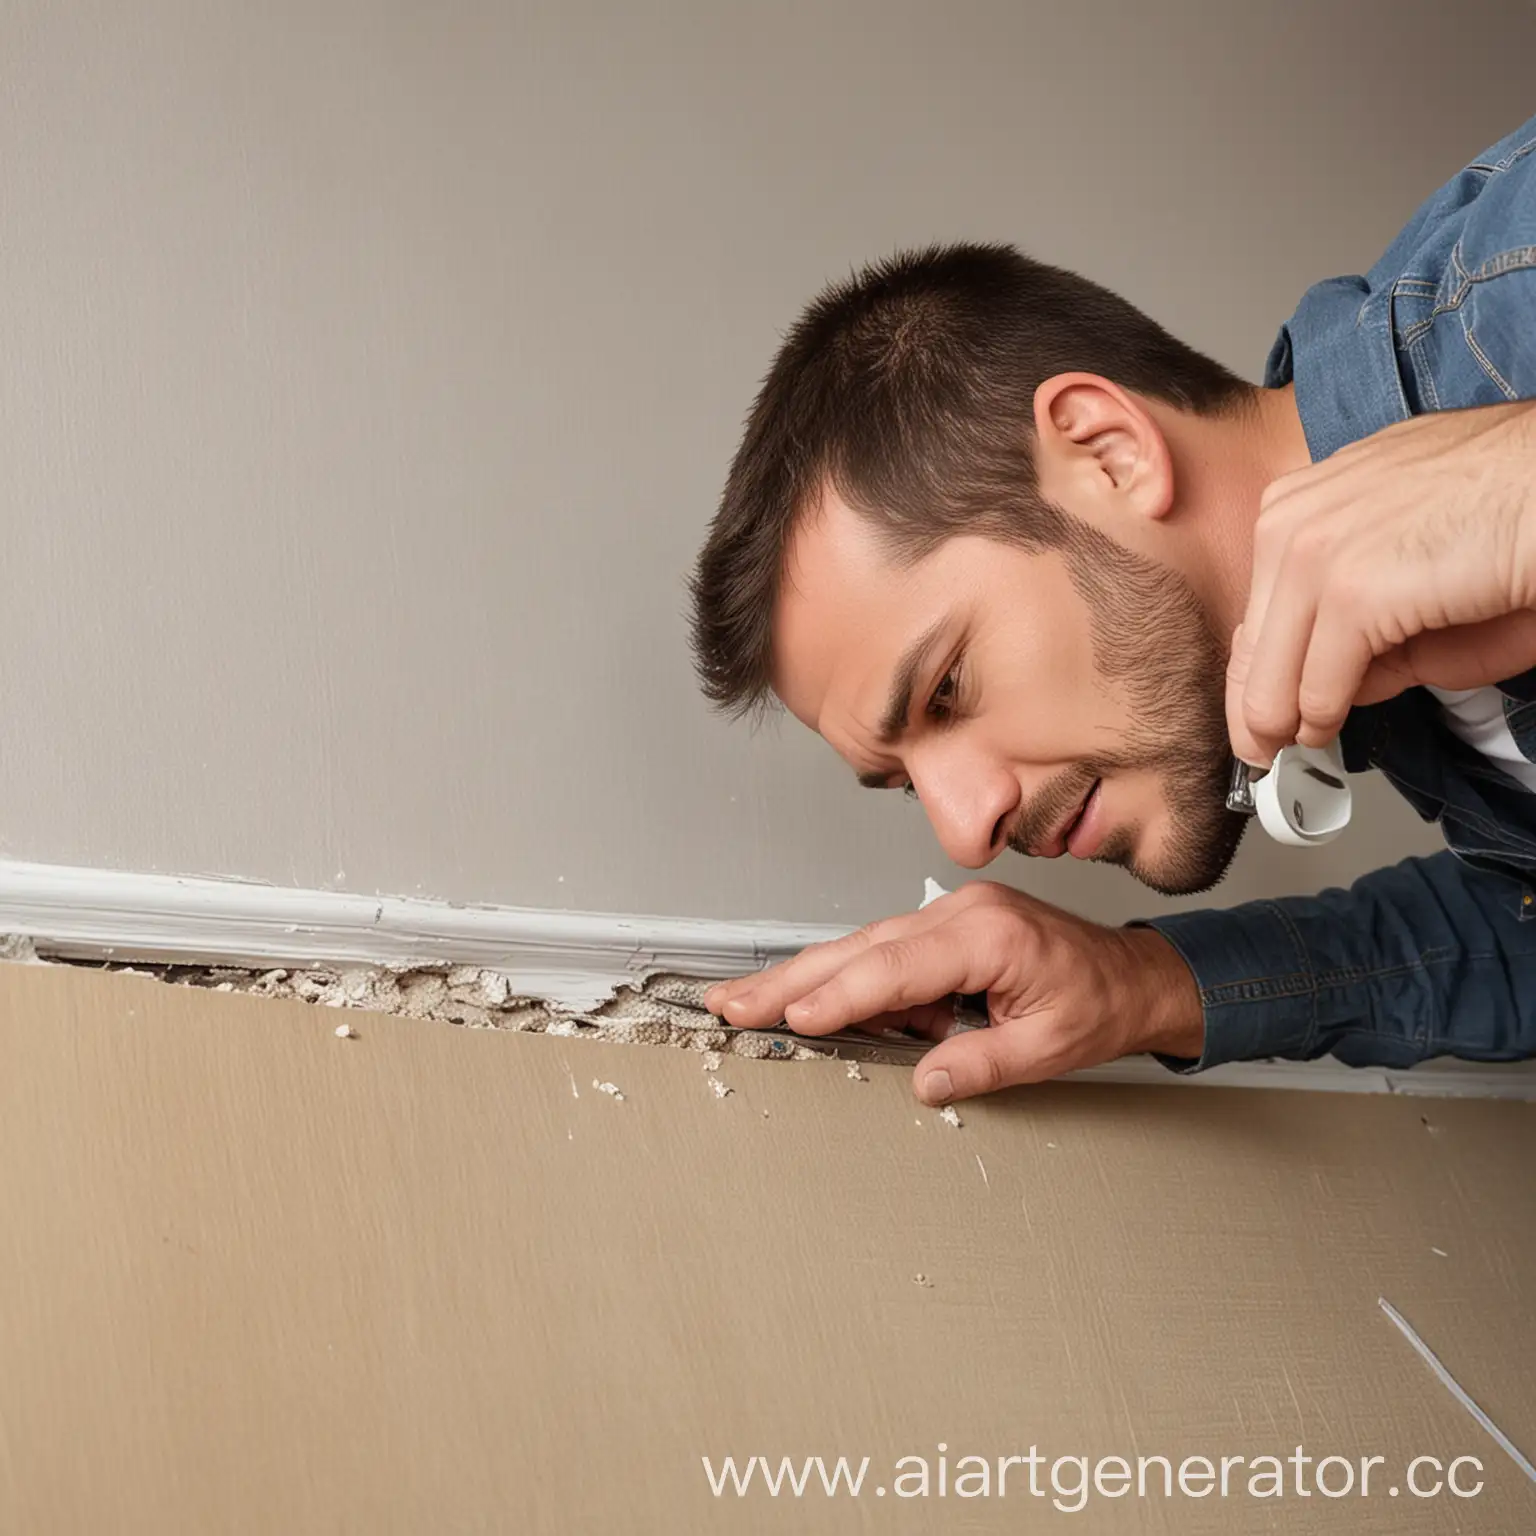 Man-Repairing-Apartment-CloseUp-Shot-of-Handyman-Fixing-Interior